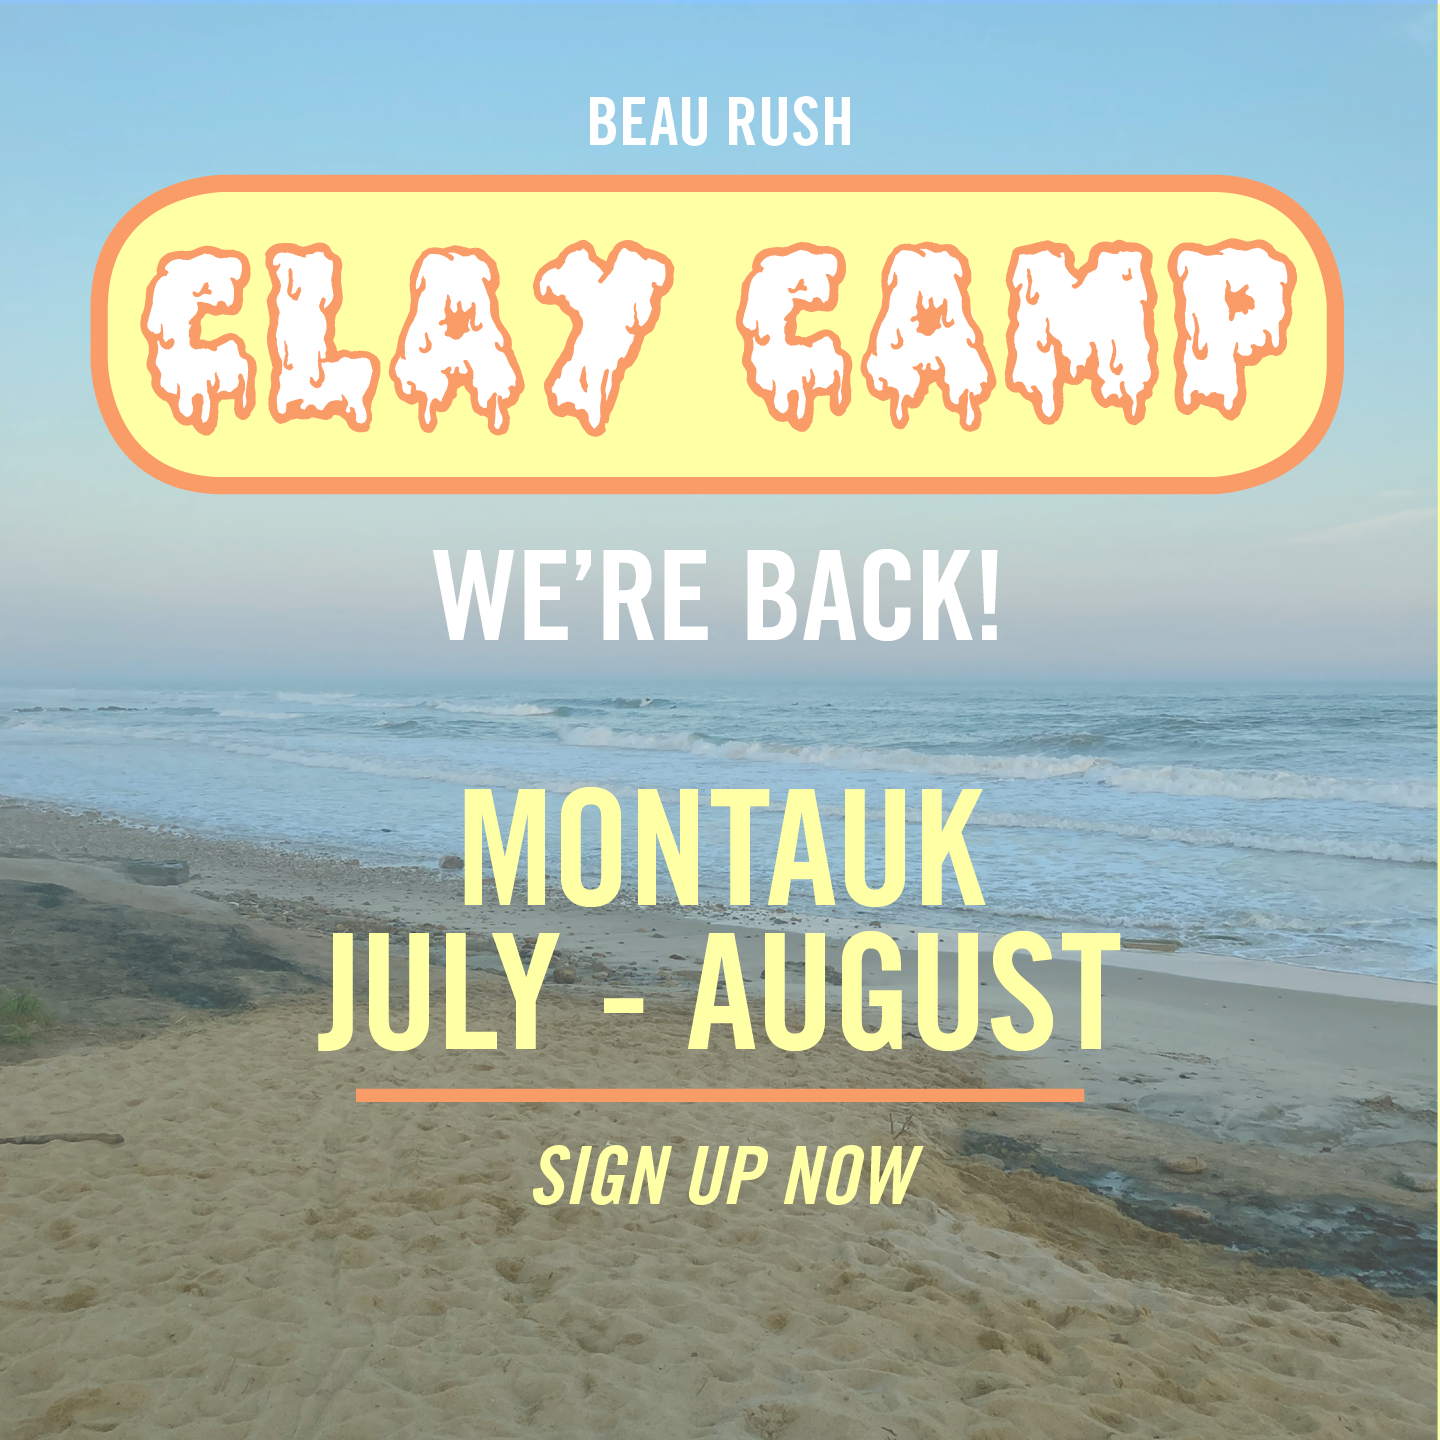 Clay Camp- Hero Beach Club Drop In